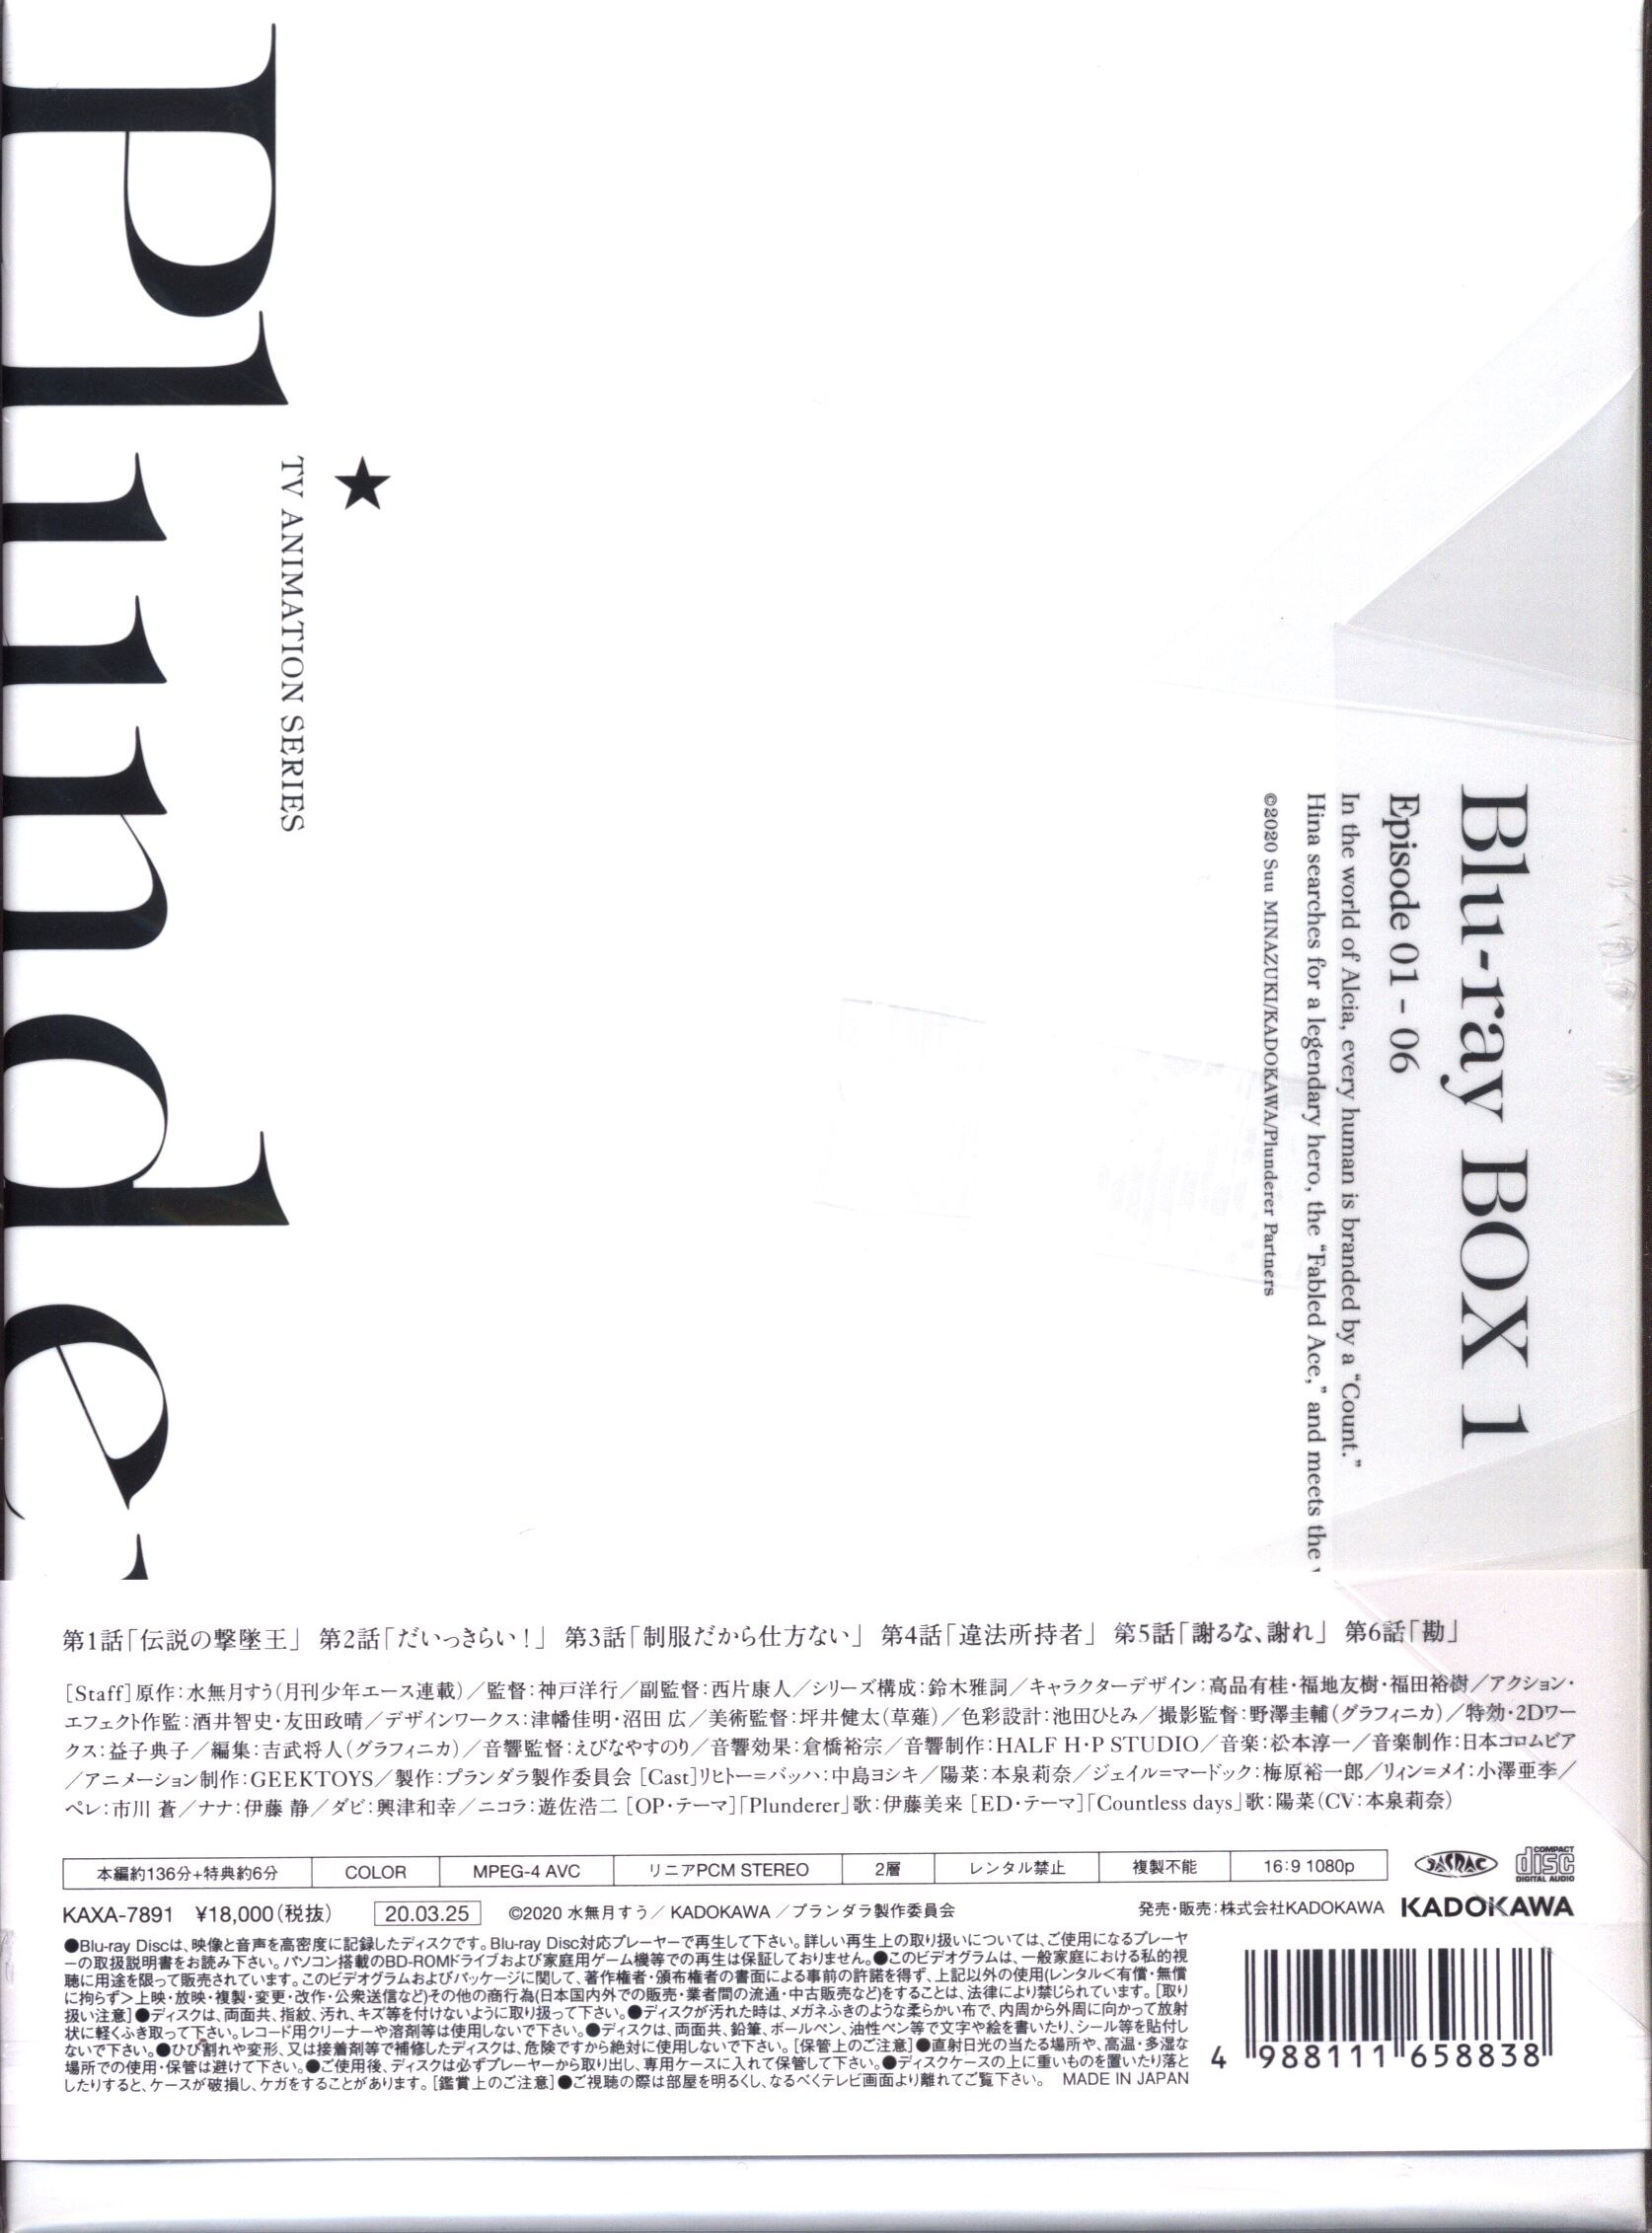 KADOKAWA Anime on X: #anime Plunderer Japanese Blu-ray BOX Vol